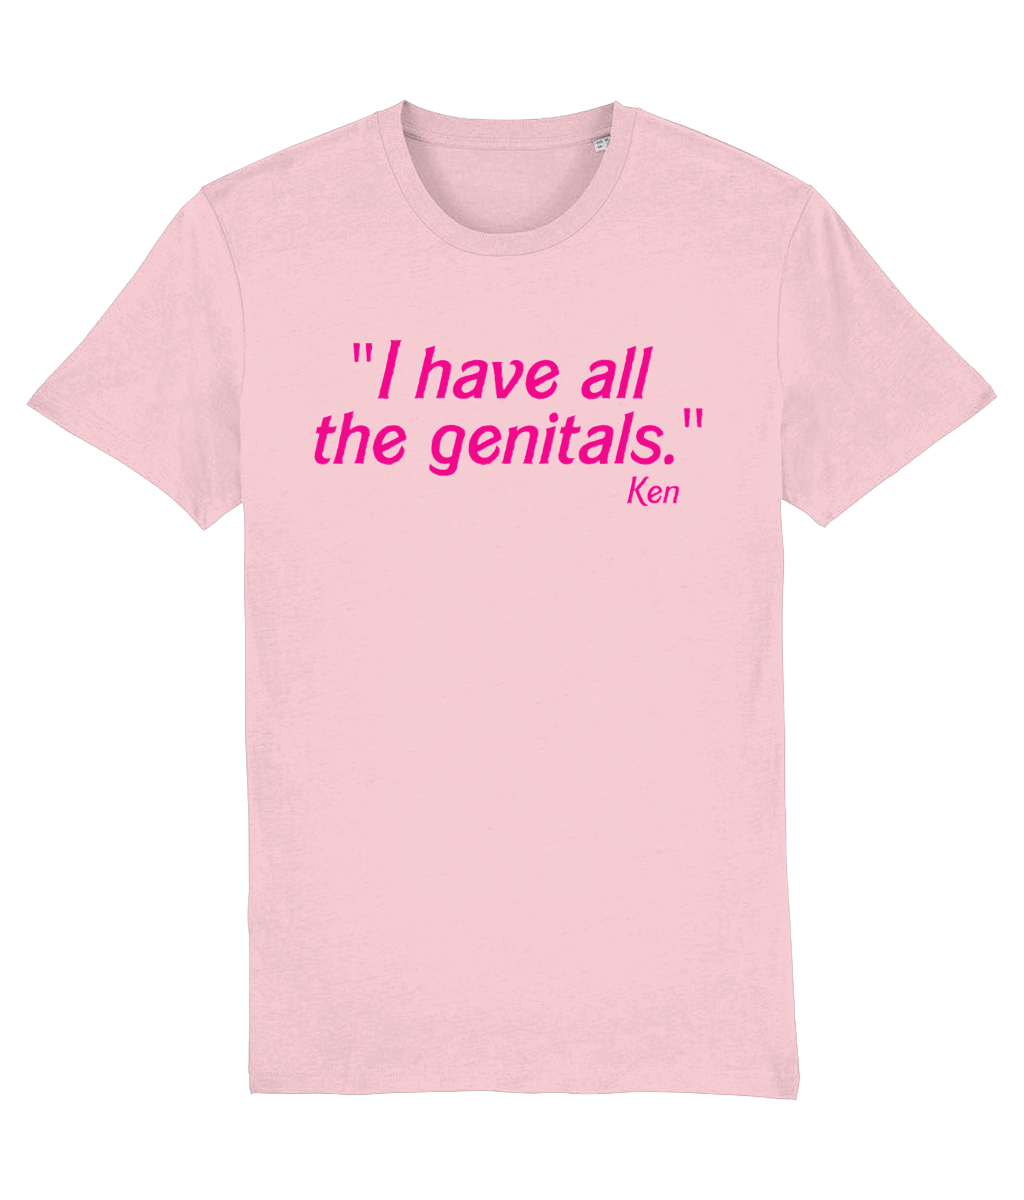 I have all the genitals tshirt